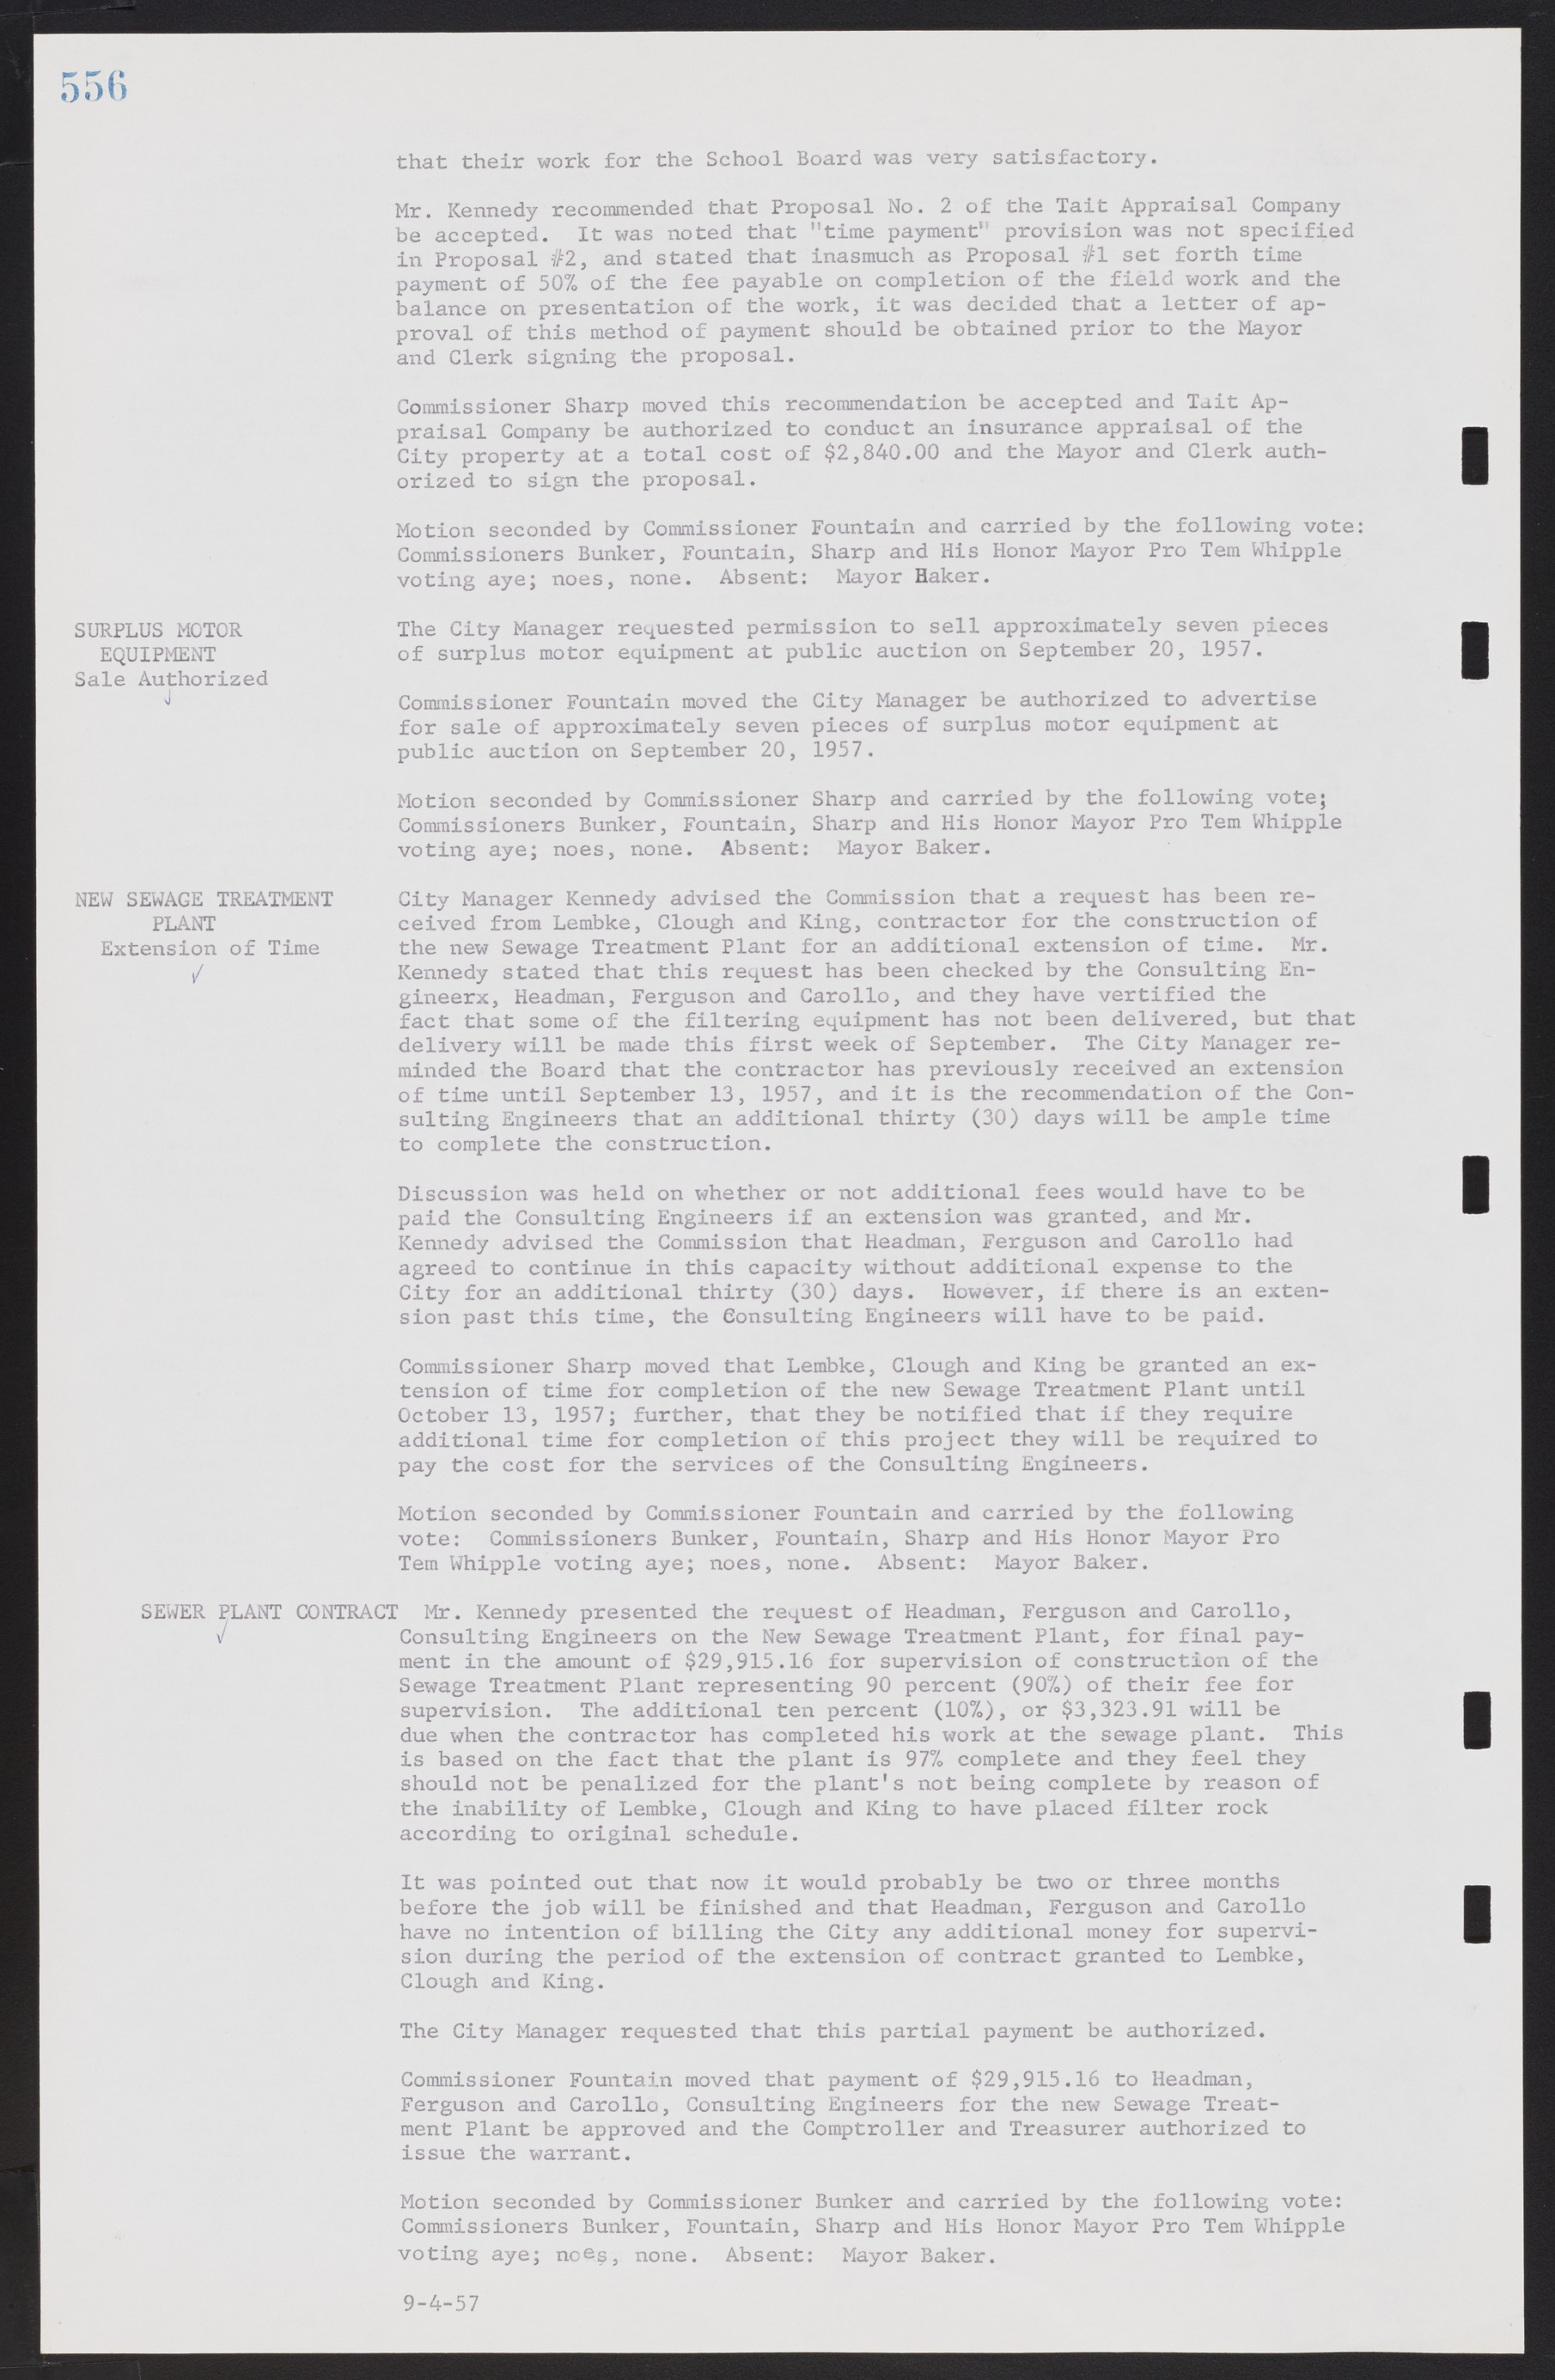 Las Vegas City Commission Minutes, September 21, 1955 to November 20, 1957, lvc000010-576